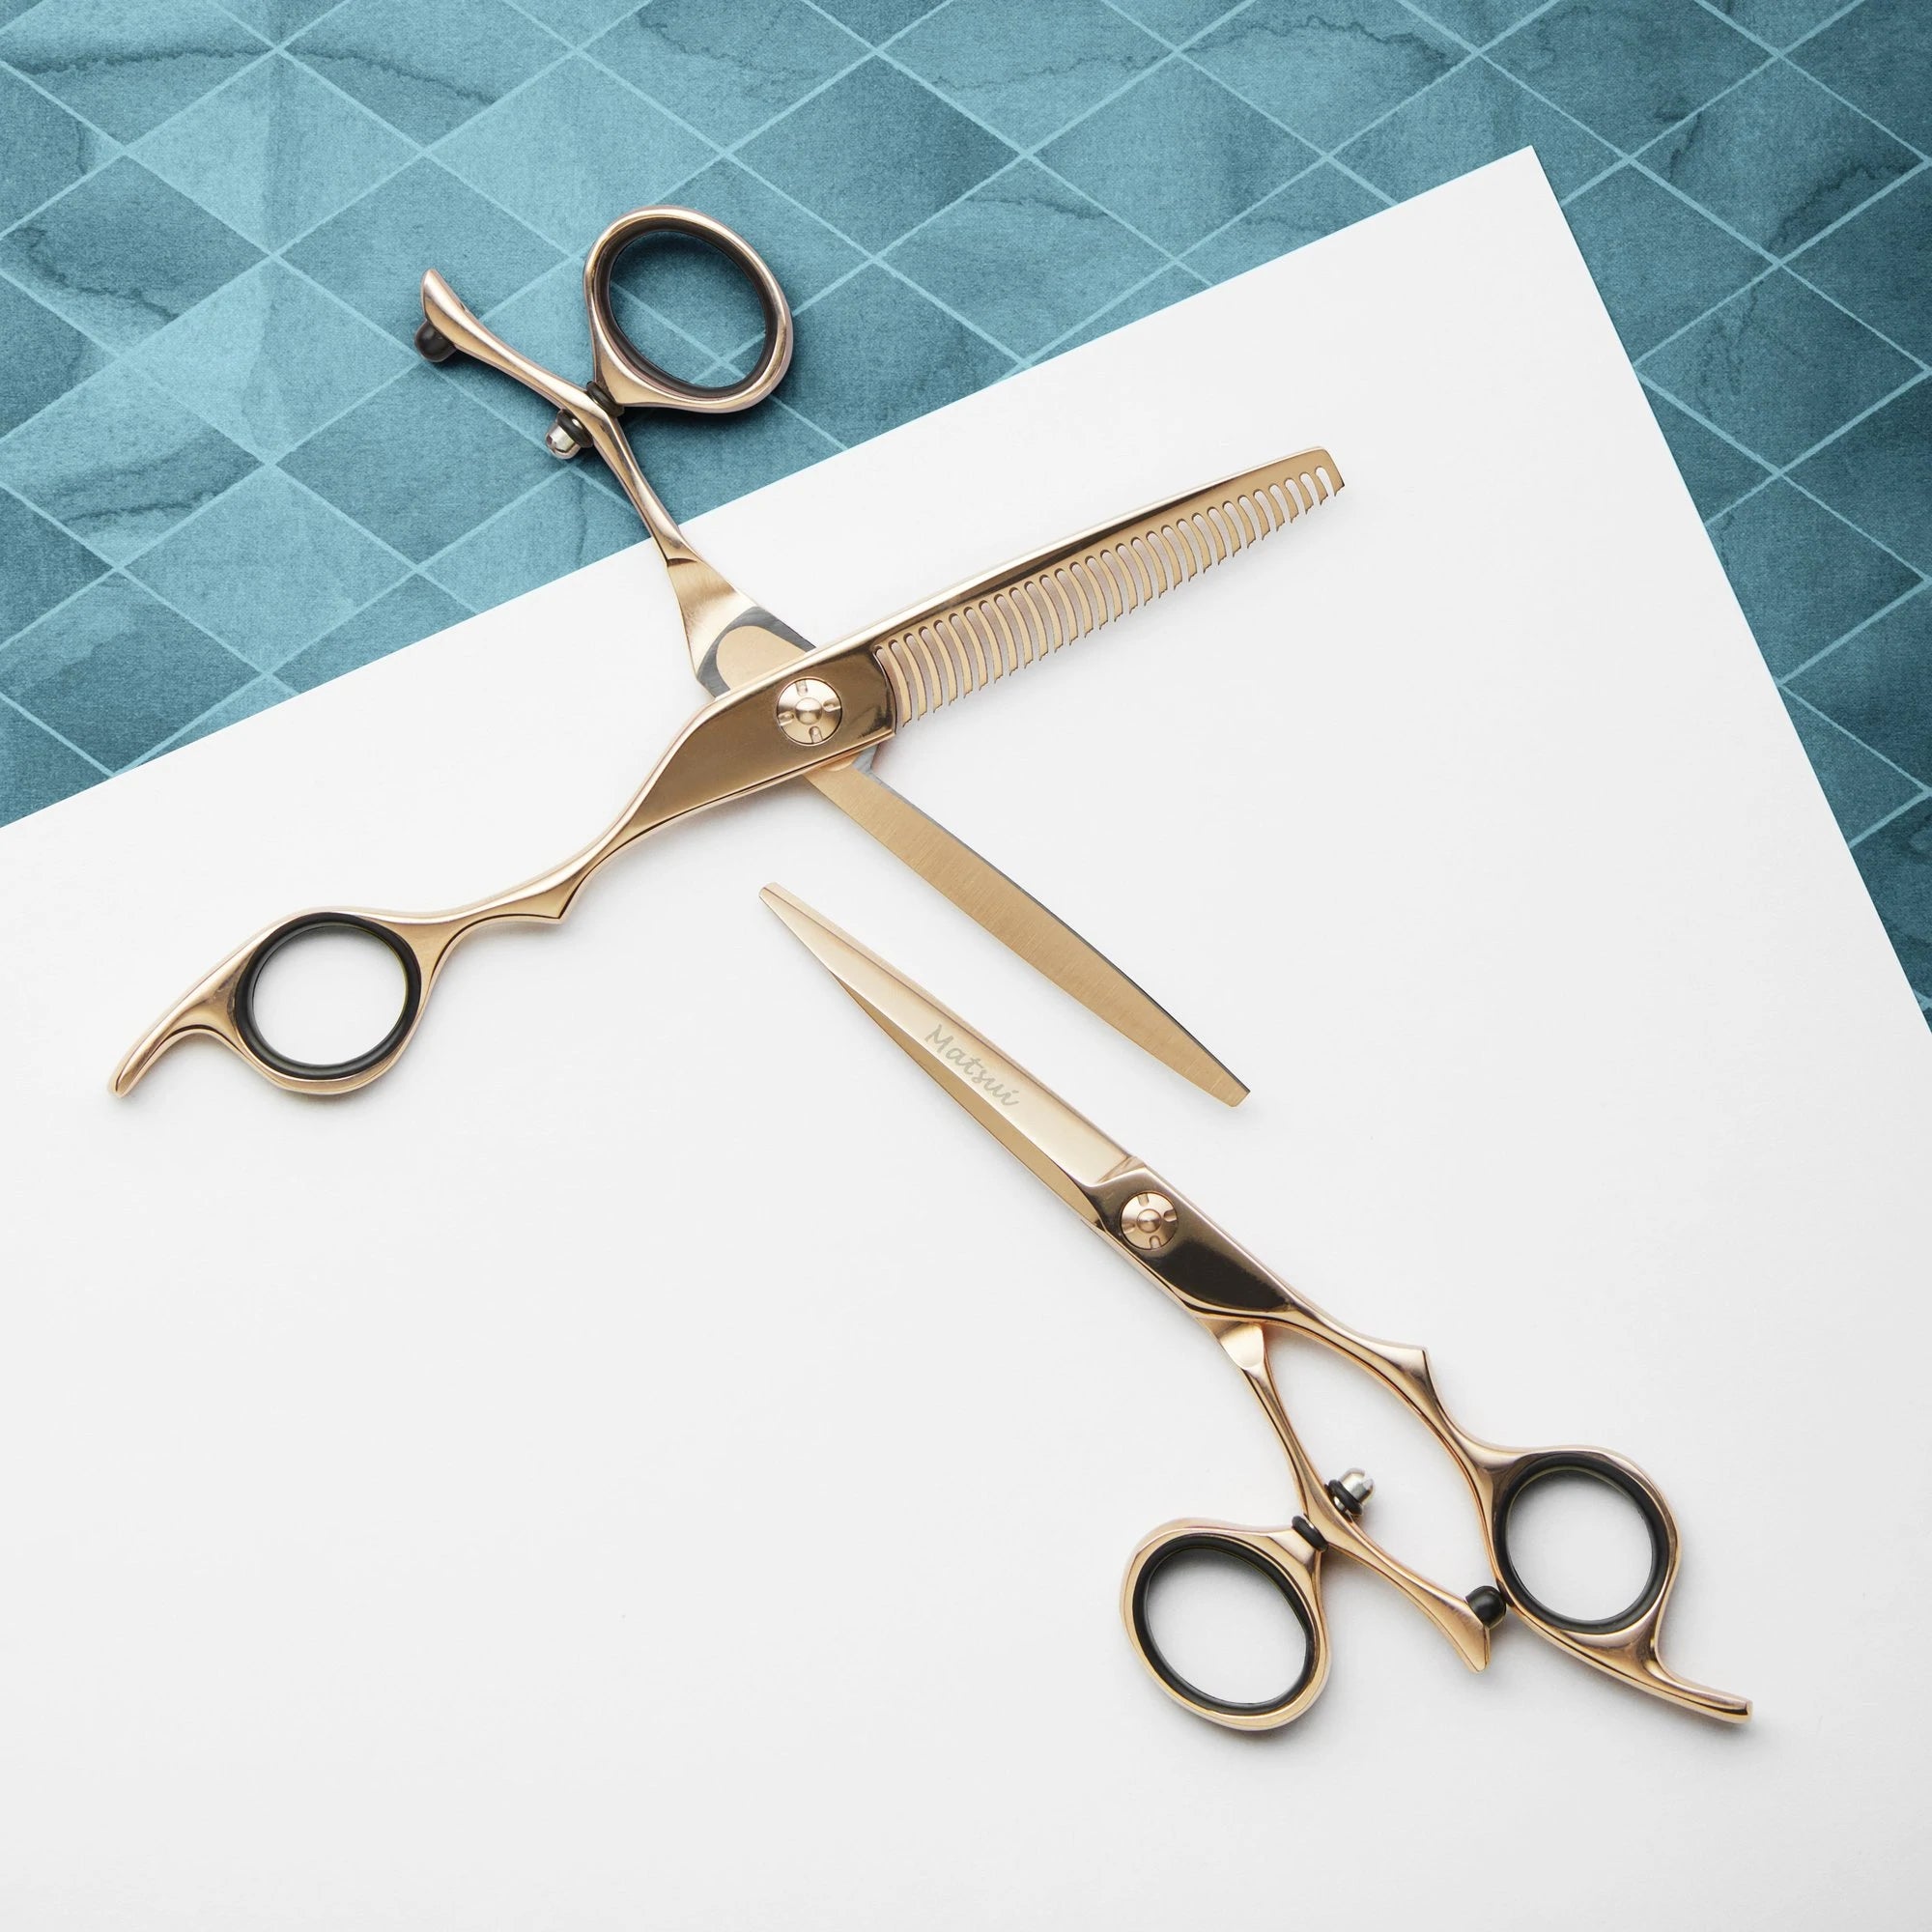 Hair Salon Hairdresser Self - Grinding Scissors Machine Flat Shear